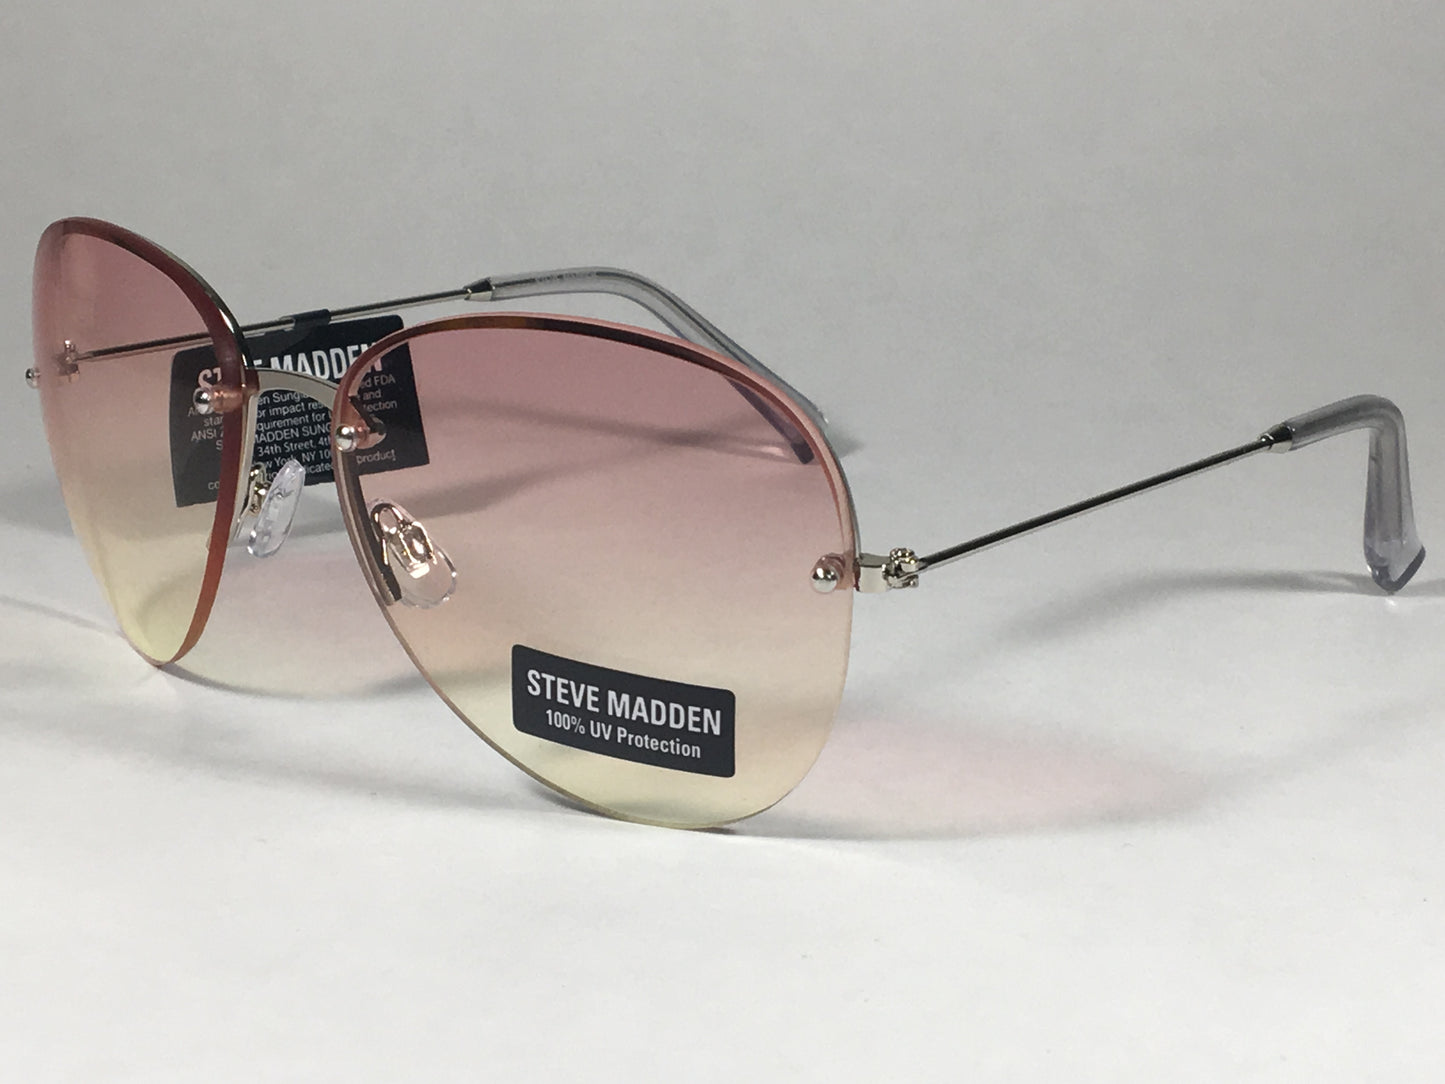 Steve Madden Rimless Aviator Sunglasses Silver Metal Frame Orange Yellow Clear Ocean Lens Sm482103 - Sunglasses